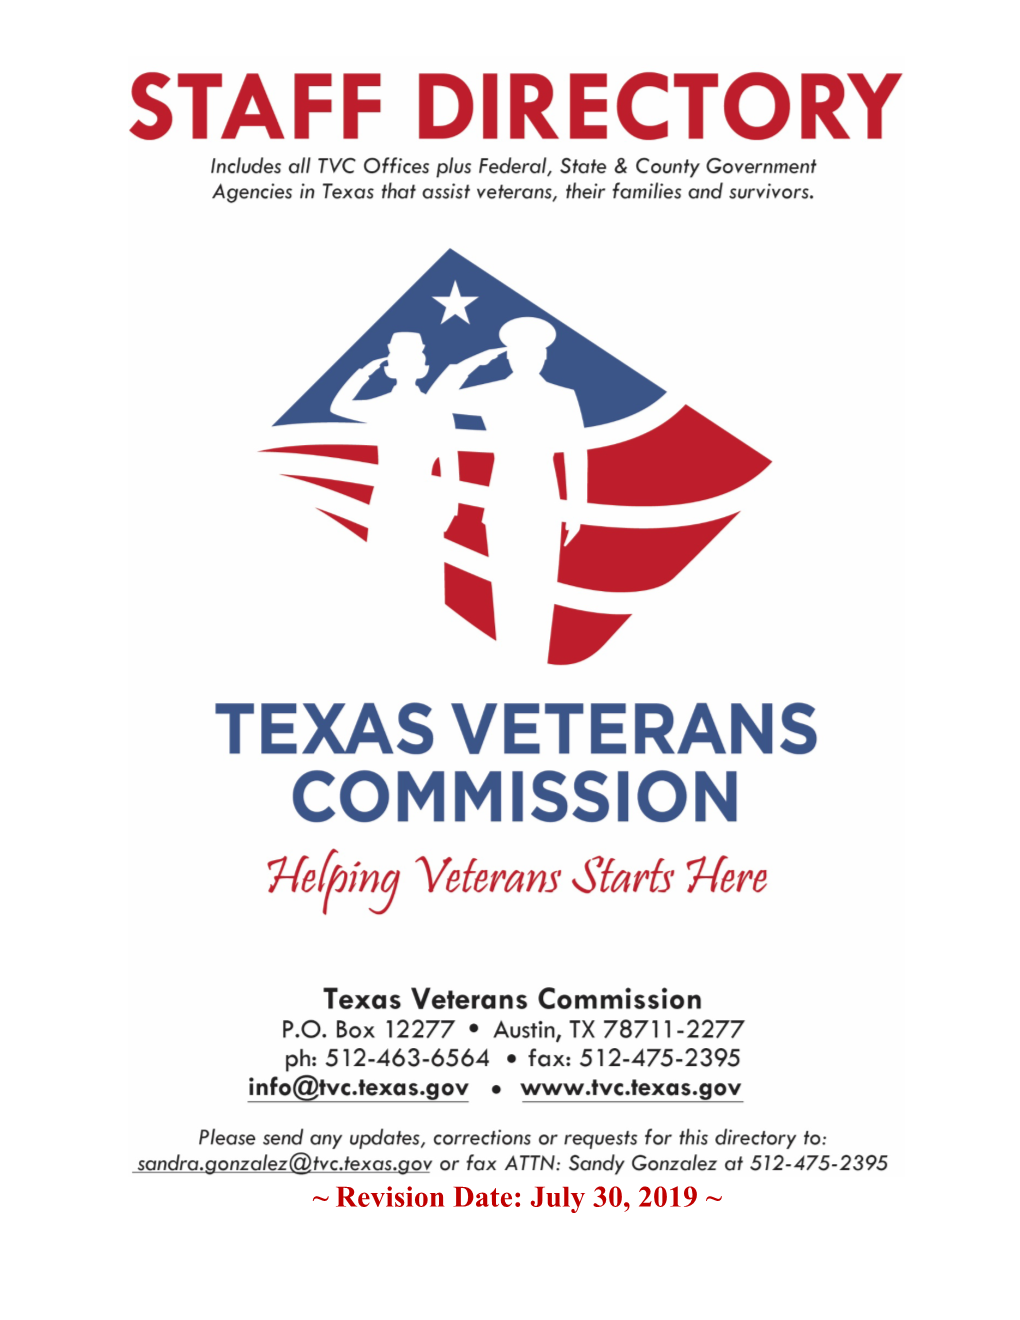 Texas Veterans Commission Directory - 1 - Texas Veterans Commission